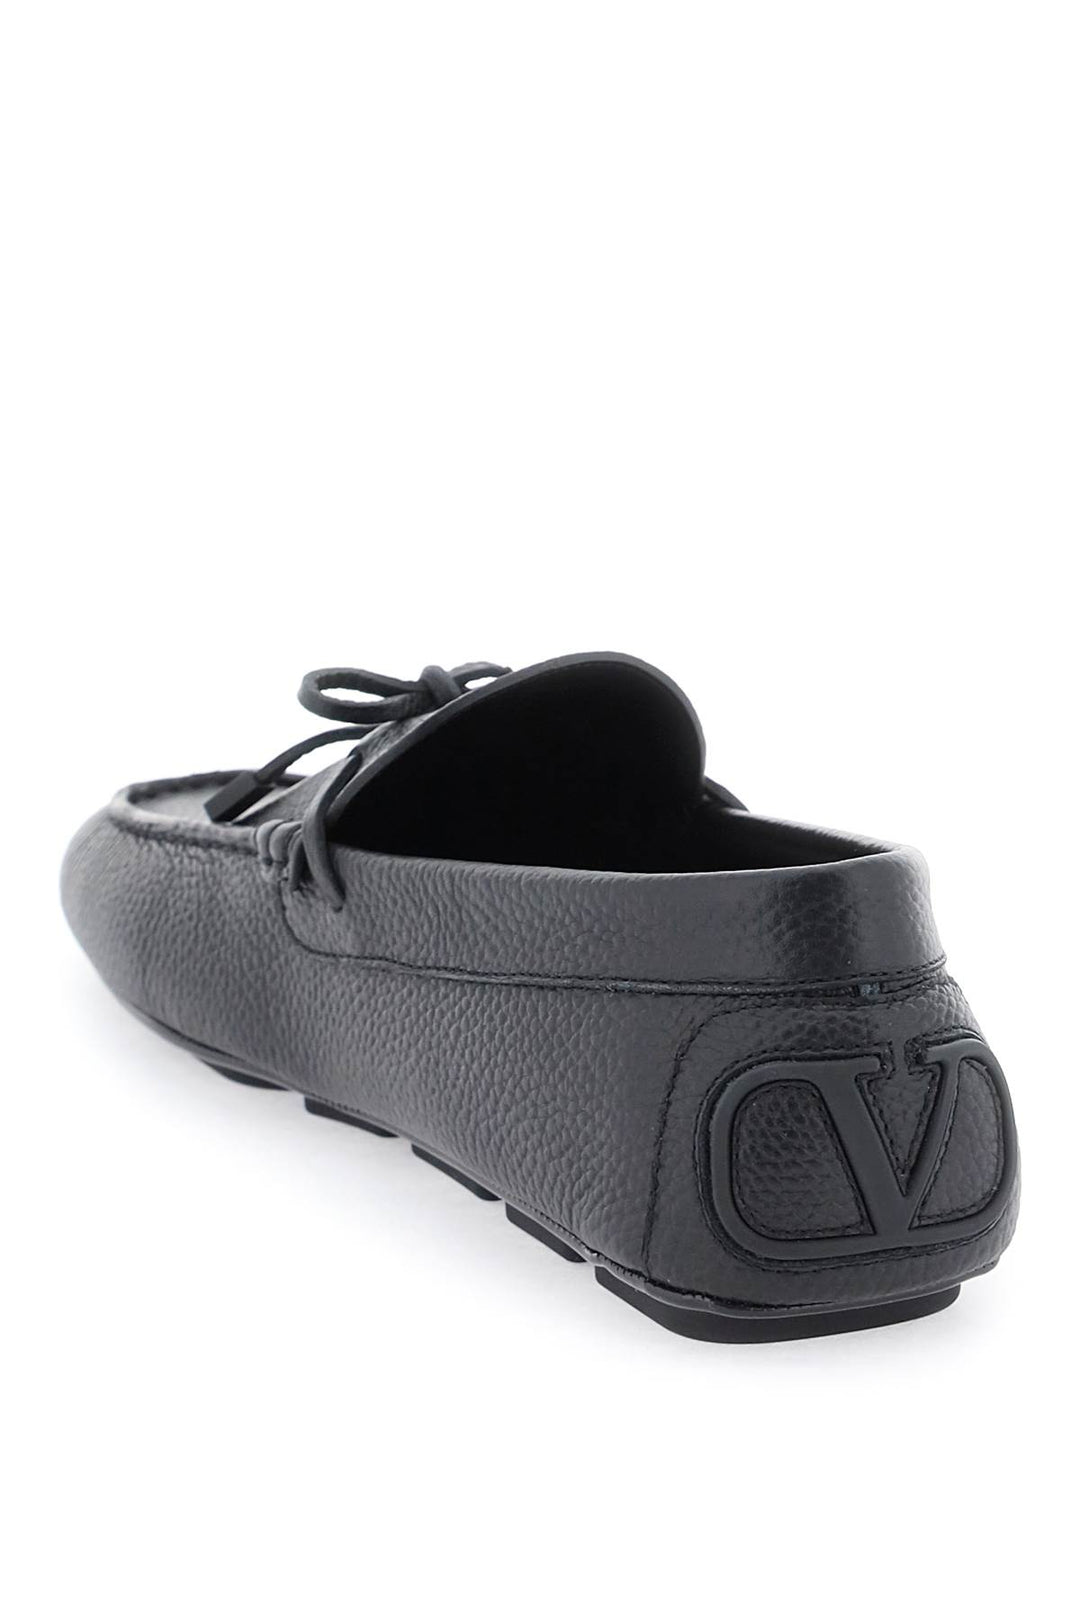 Valentino Garavani Leather Loafers With Bow   Nero